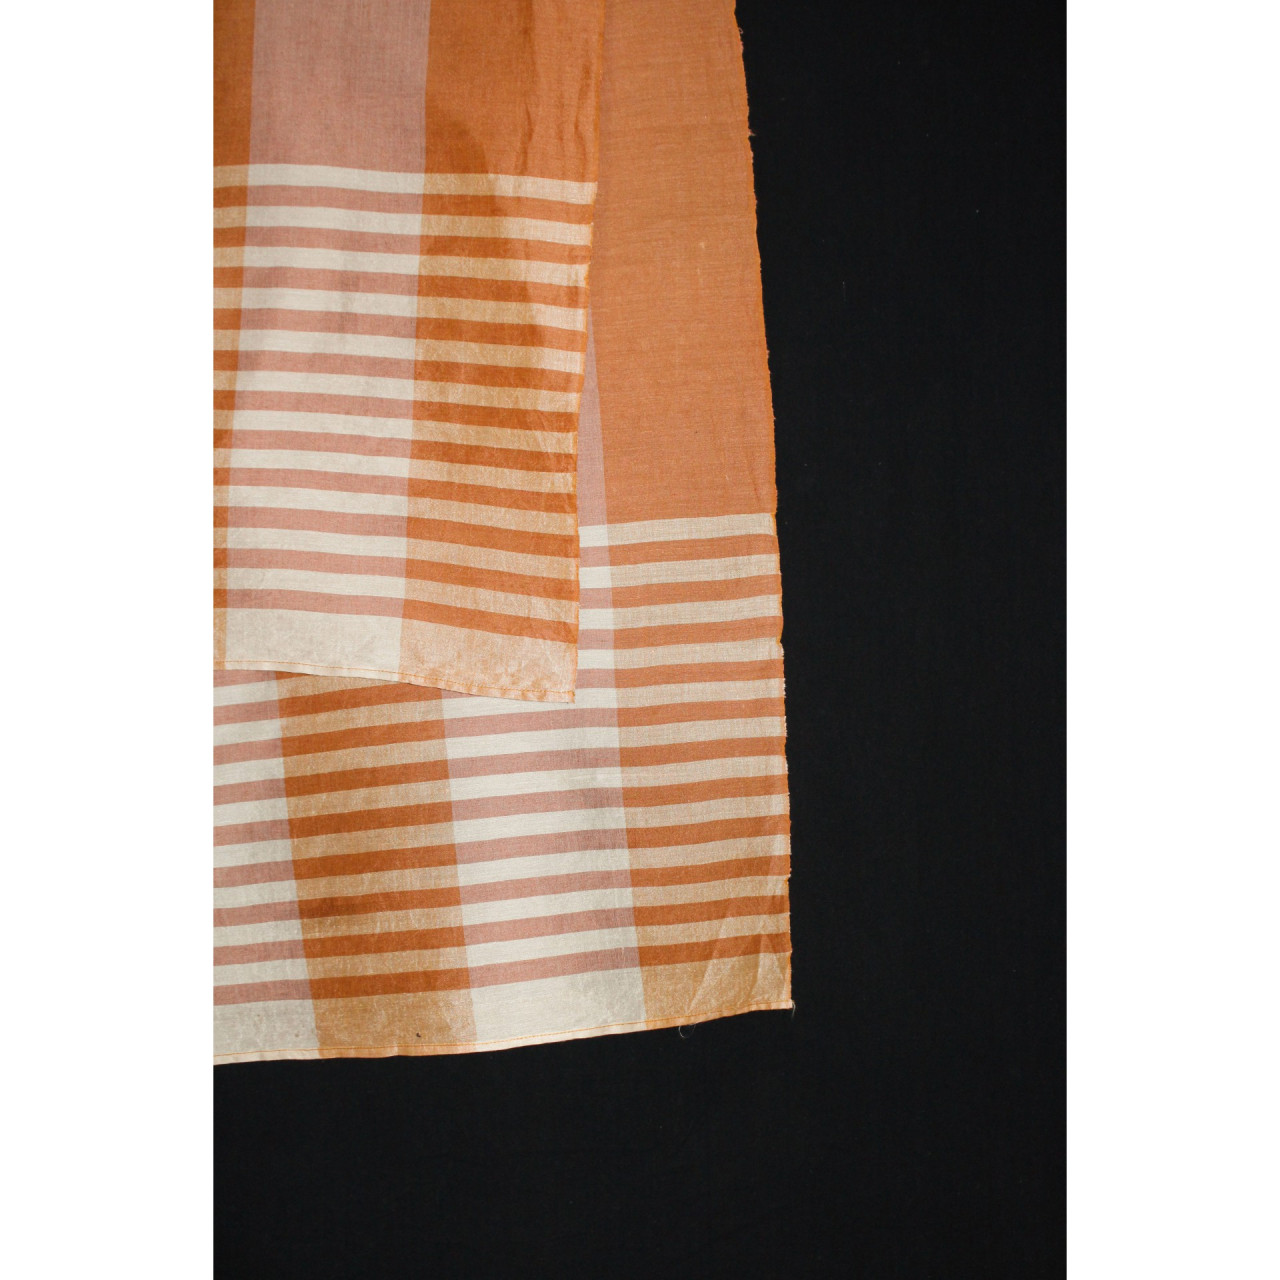 (2158) Khadi  and linen Azo-free dyed stole from Shantipur - Orange, cream, stripes